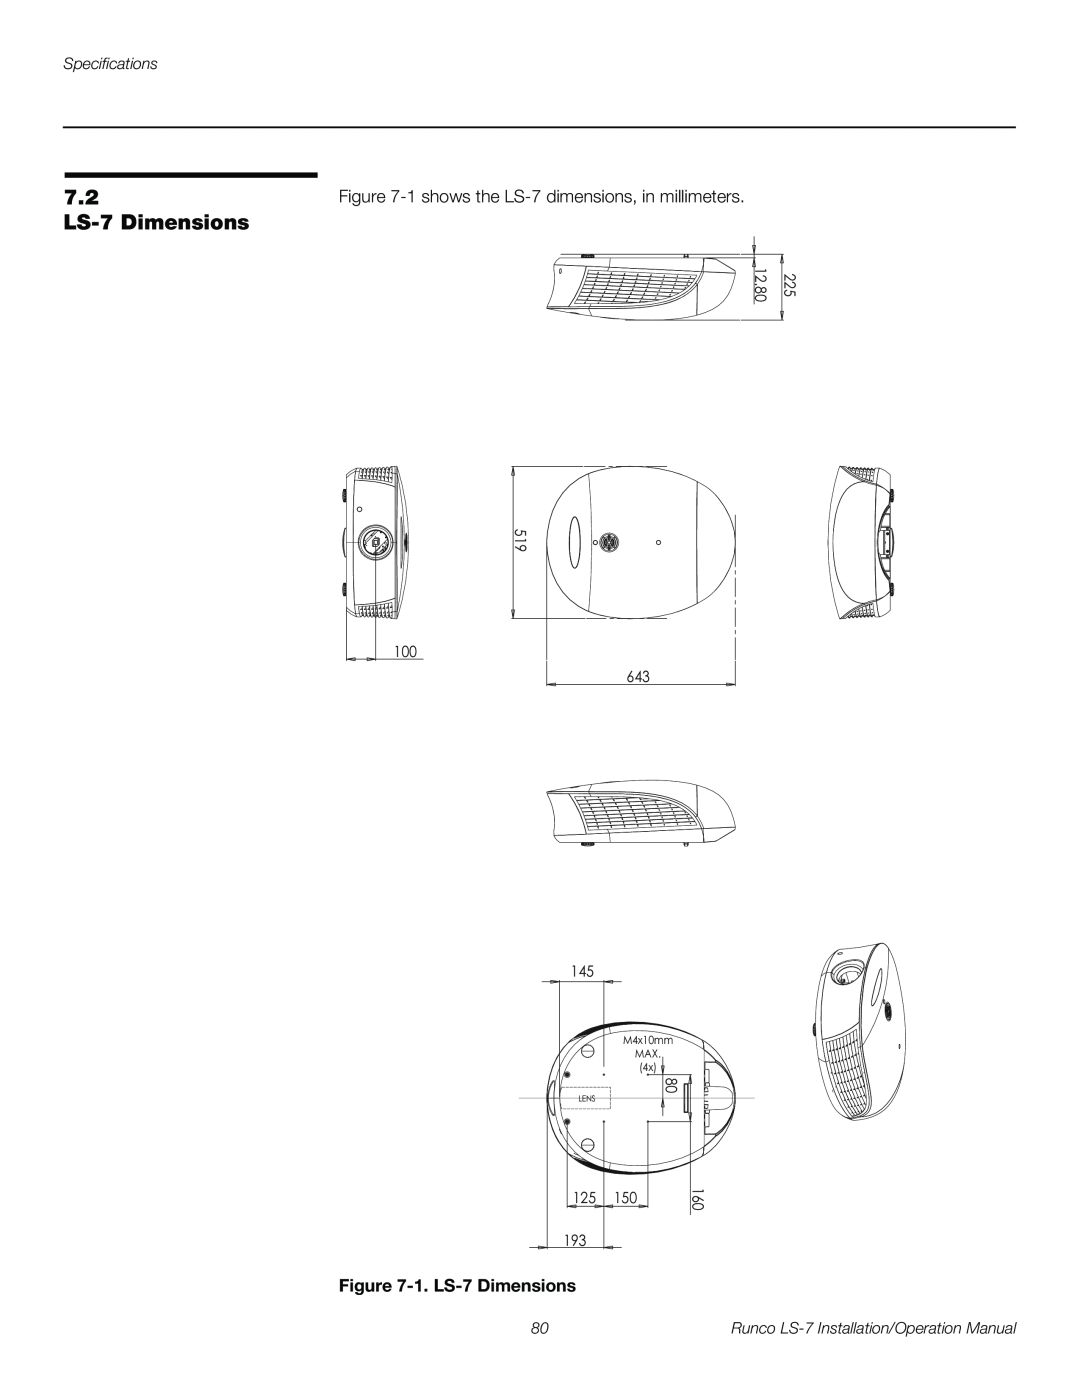 Runco operation manual 7.2 LS-7Dimensions, 1. LS-7Dimensions, Specifications, 100, 12.80, M4x10mm, Lens 